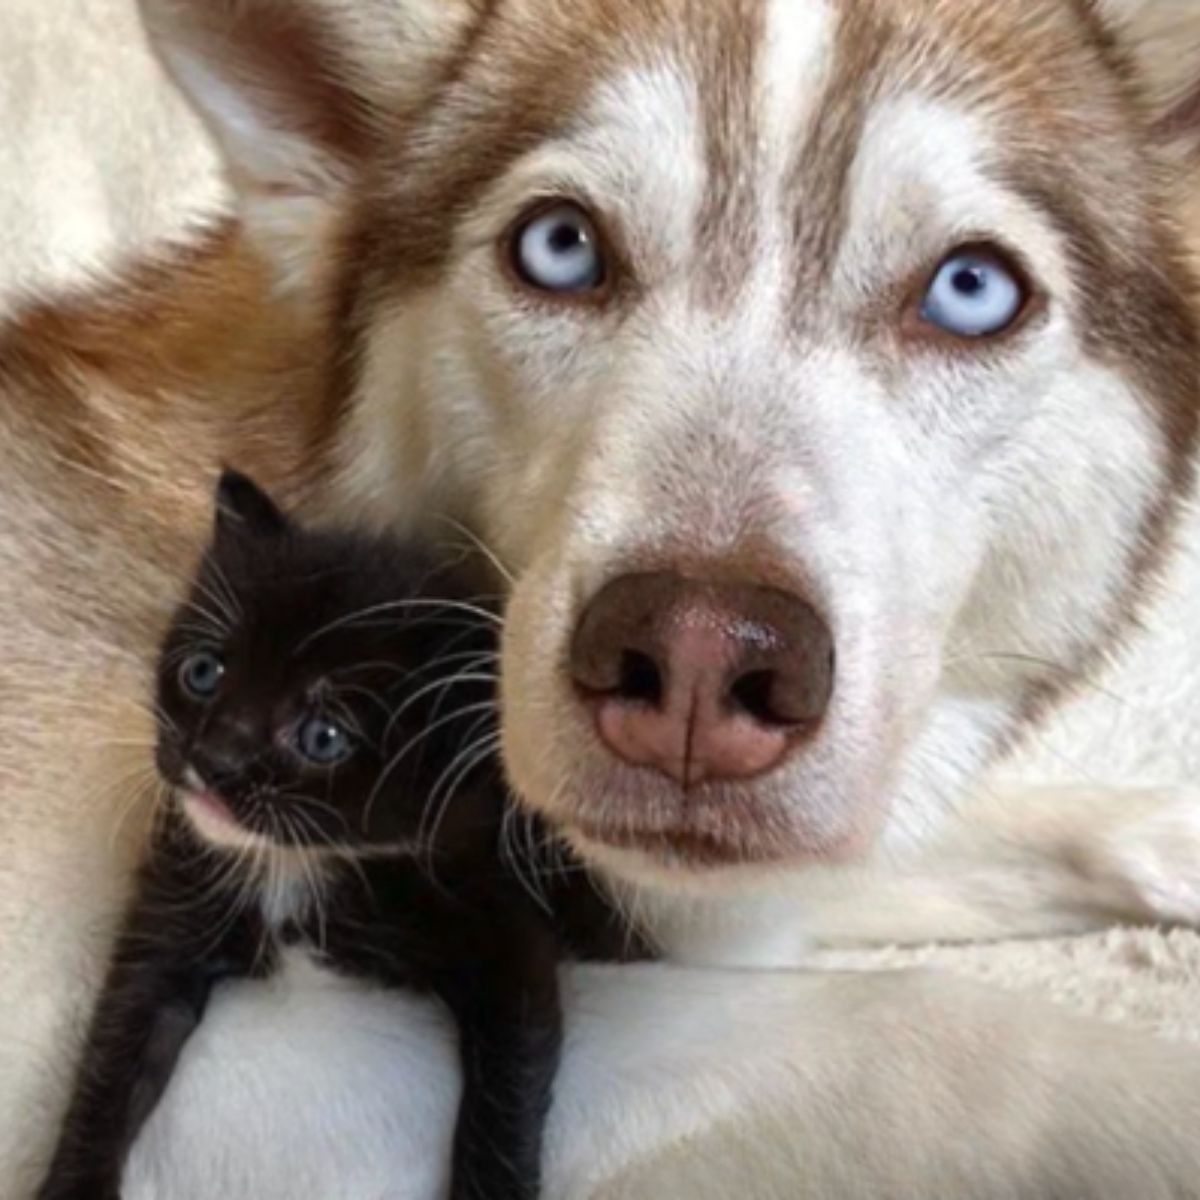 husky and a tiny kitten